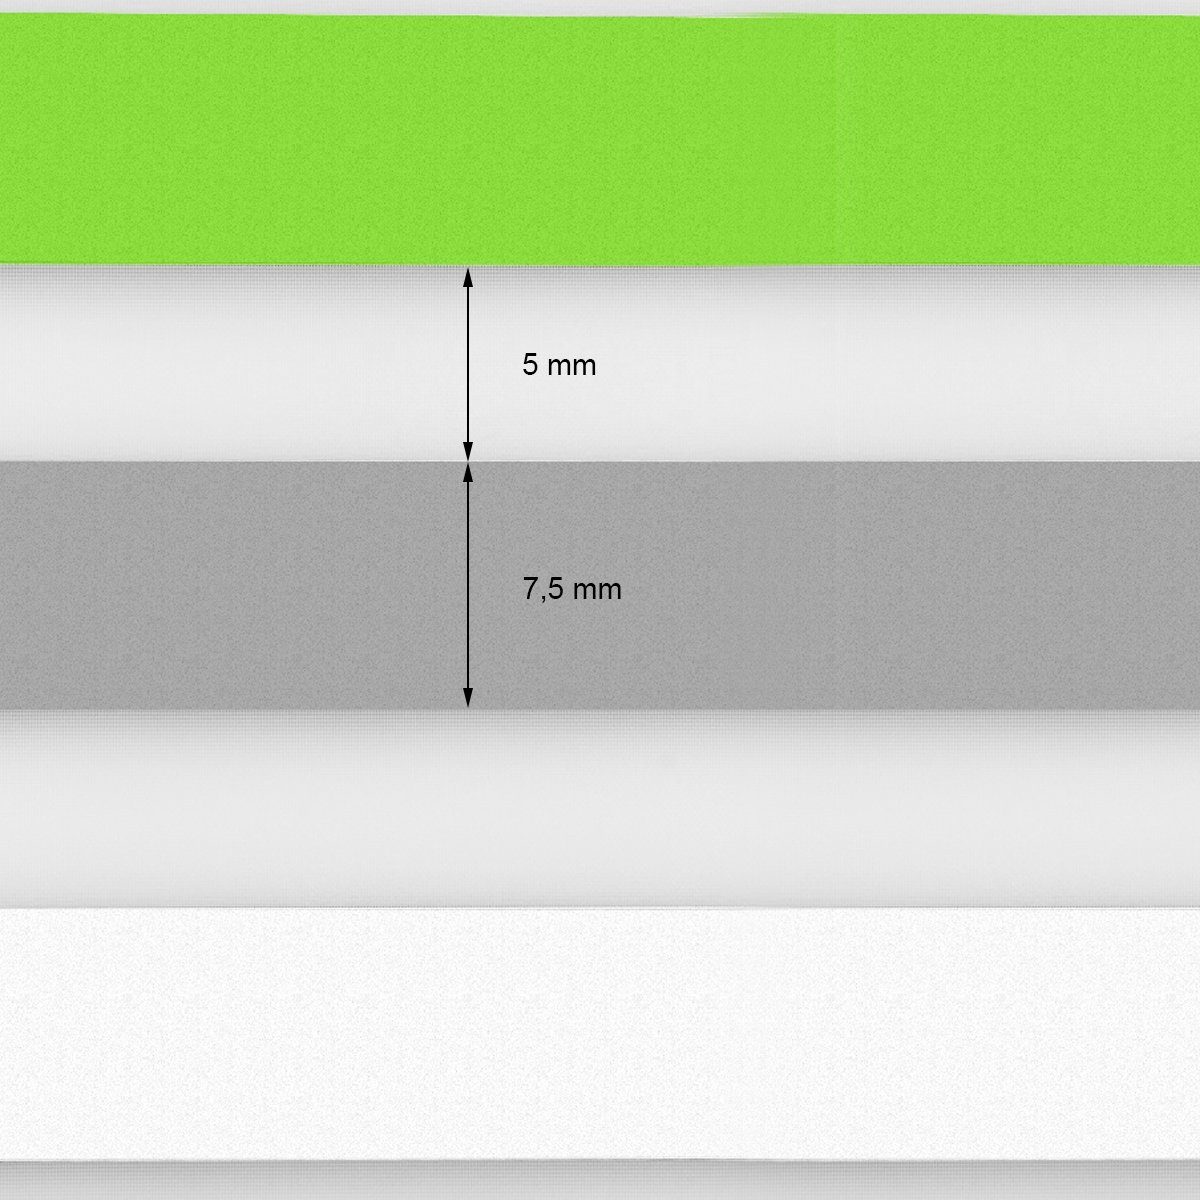 Doppelrollo 70x150cm Klemmfix, Bohren 70x150 Germany, ohne Klemmfix mit cm, Grün-Grau-Weiß ECD grün-grau-weiß, mit Klemmträgern, Klemmträgern